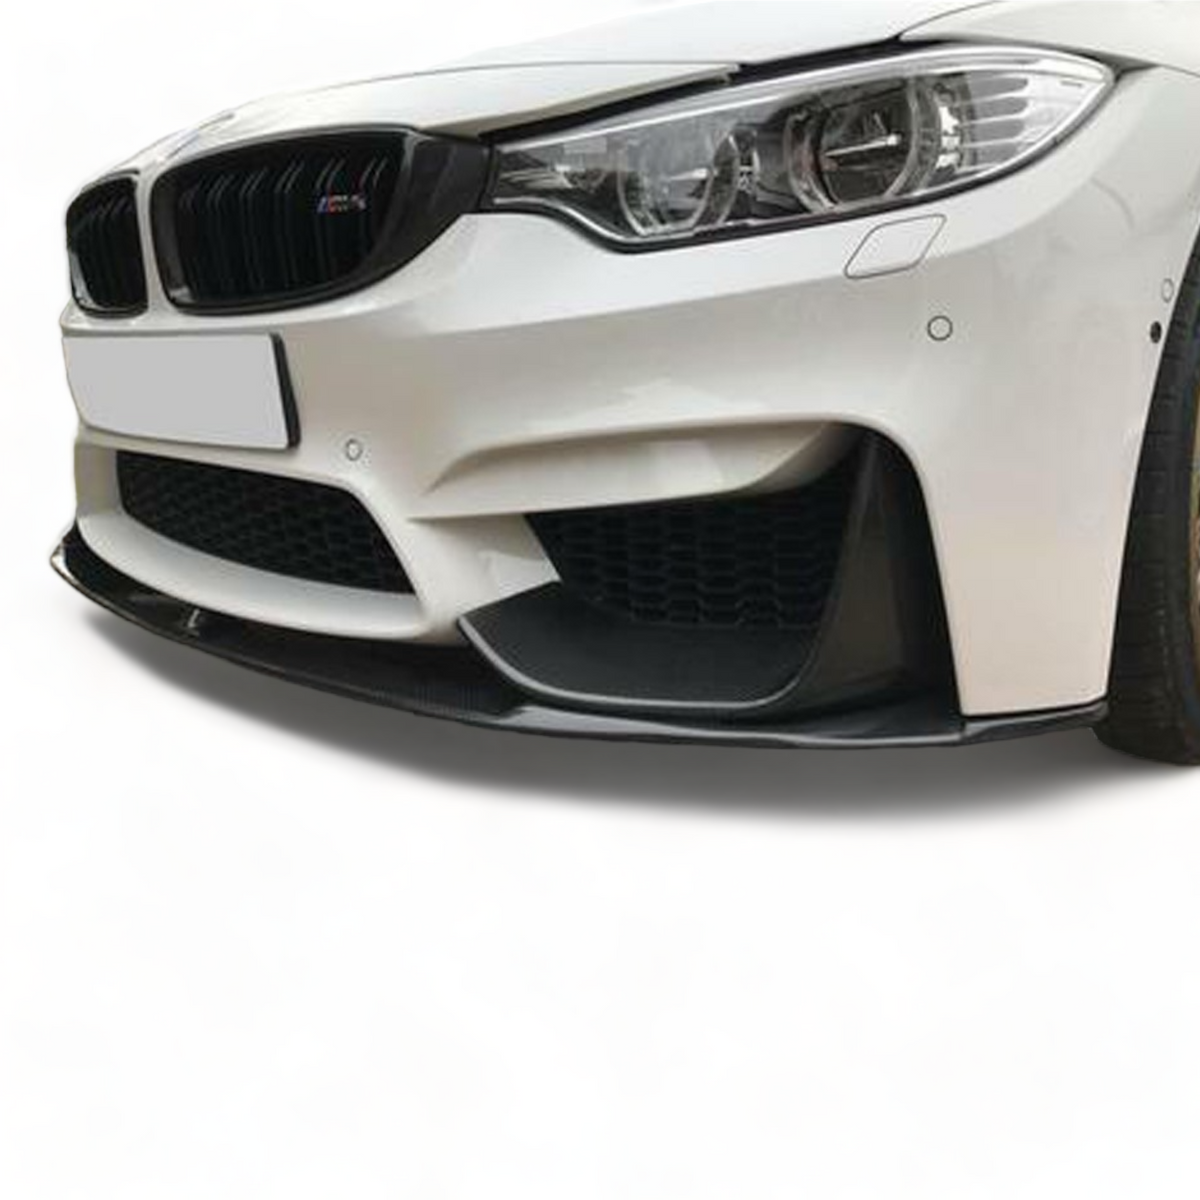 Front Splitter - 3 Piece - Fits BMW M3 F80 - ABS - Carbon